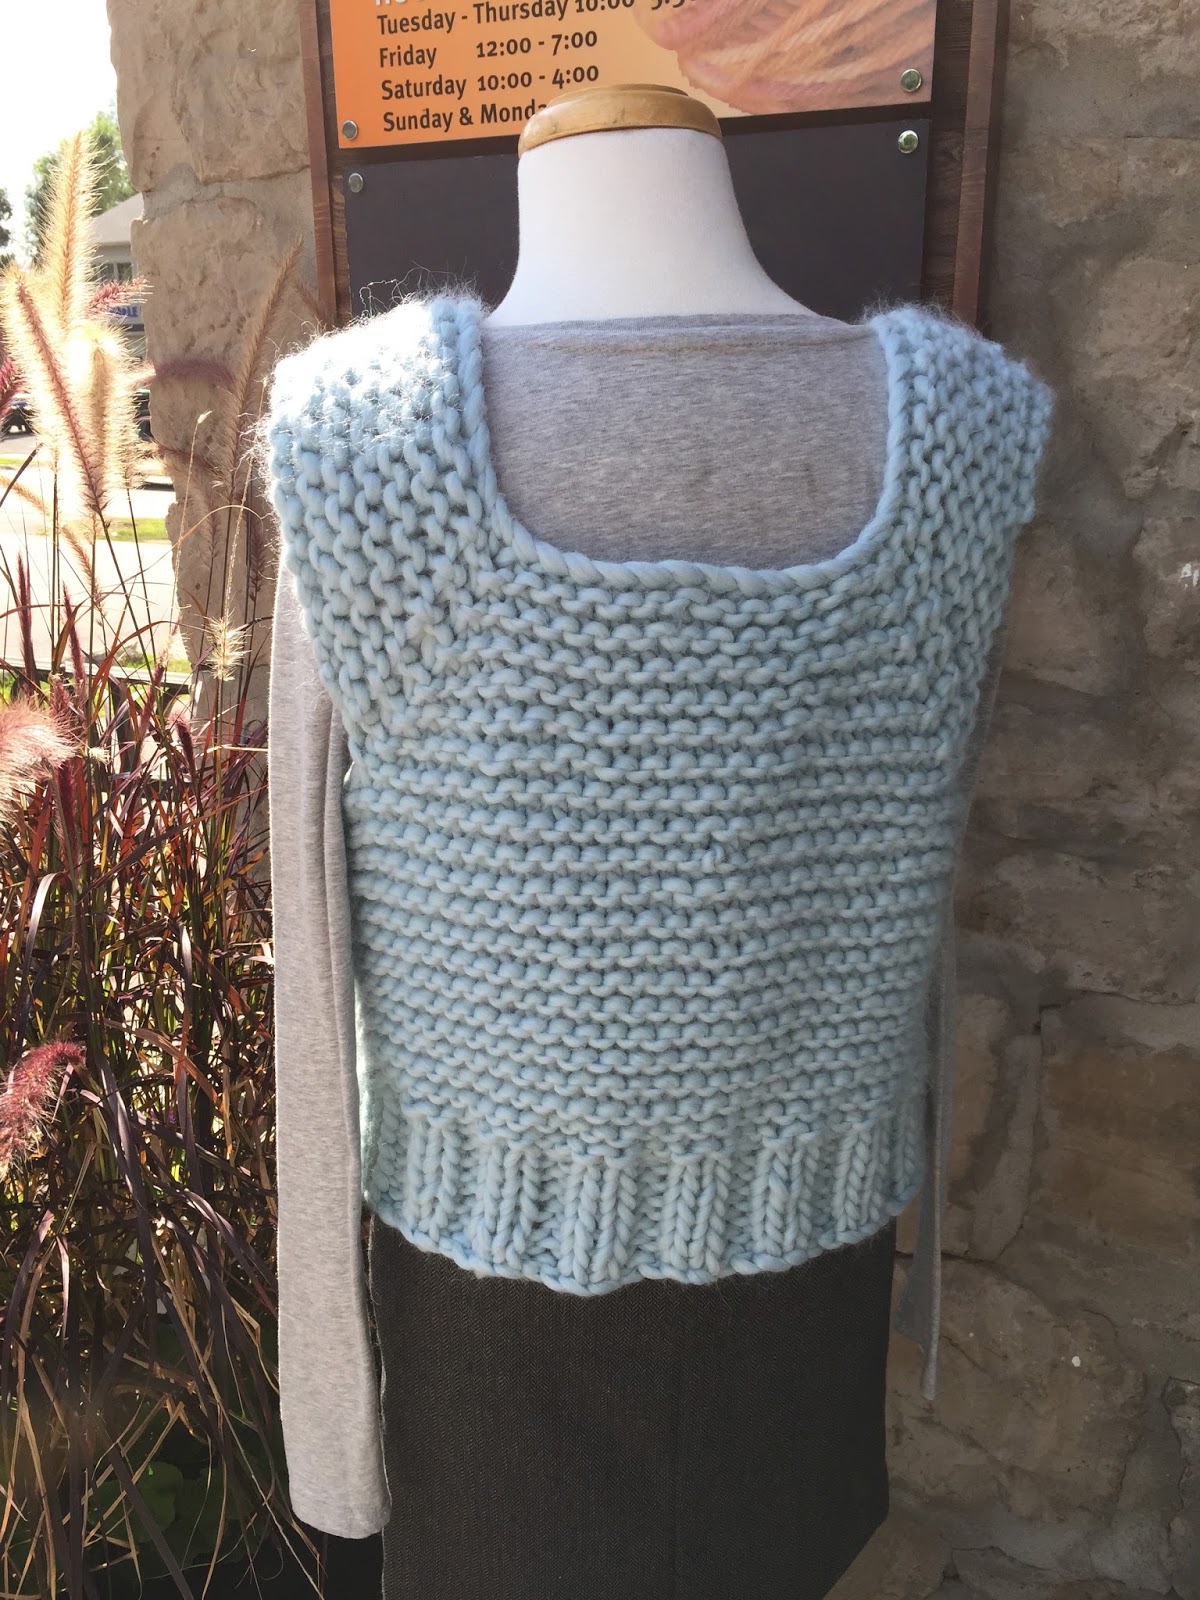 A Really Good Yarn: Big needles = Quick knit